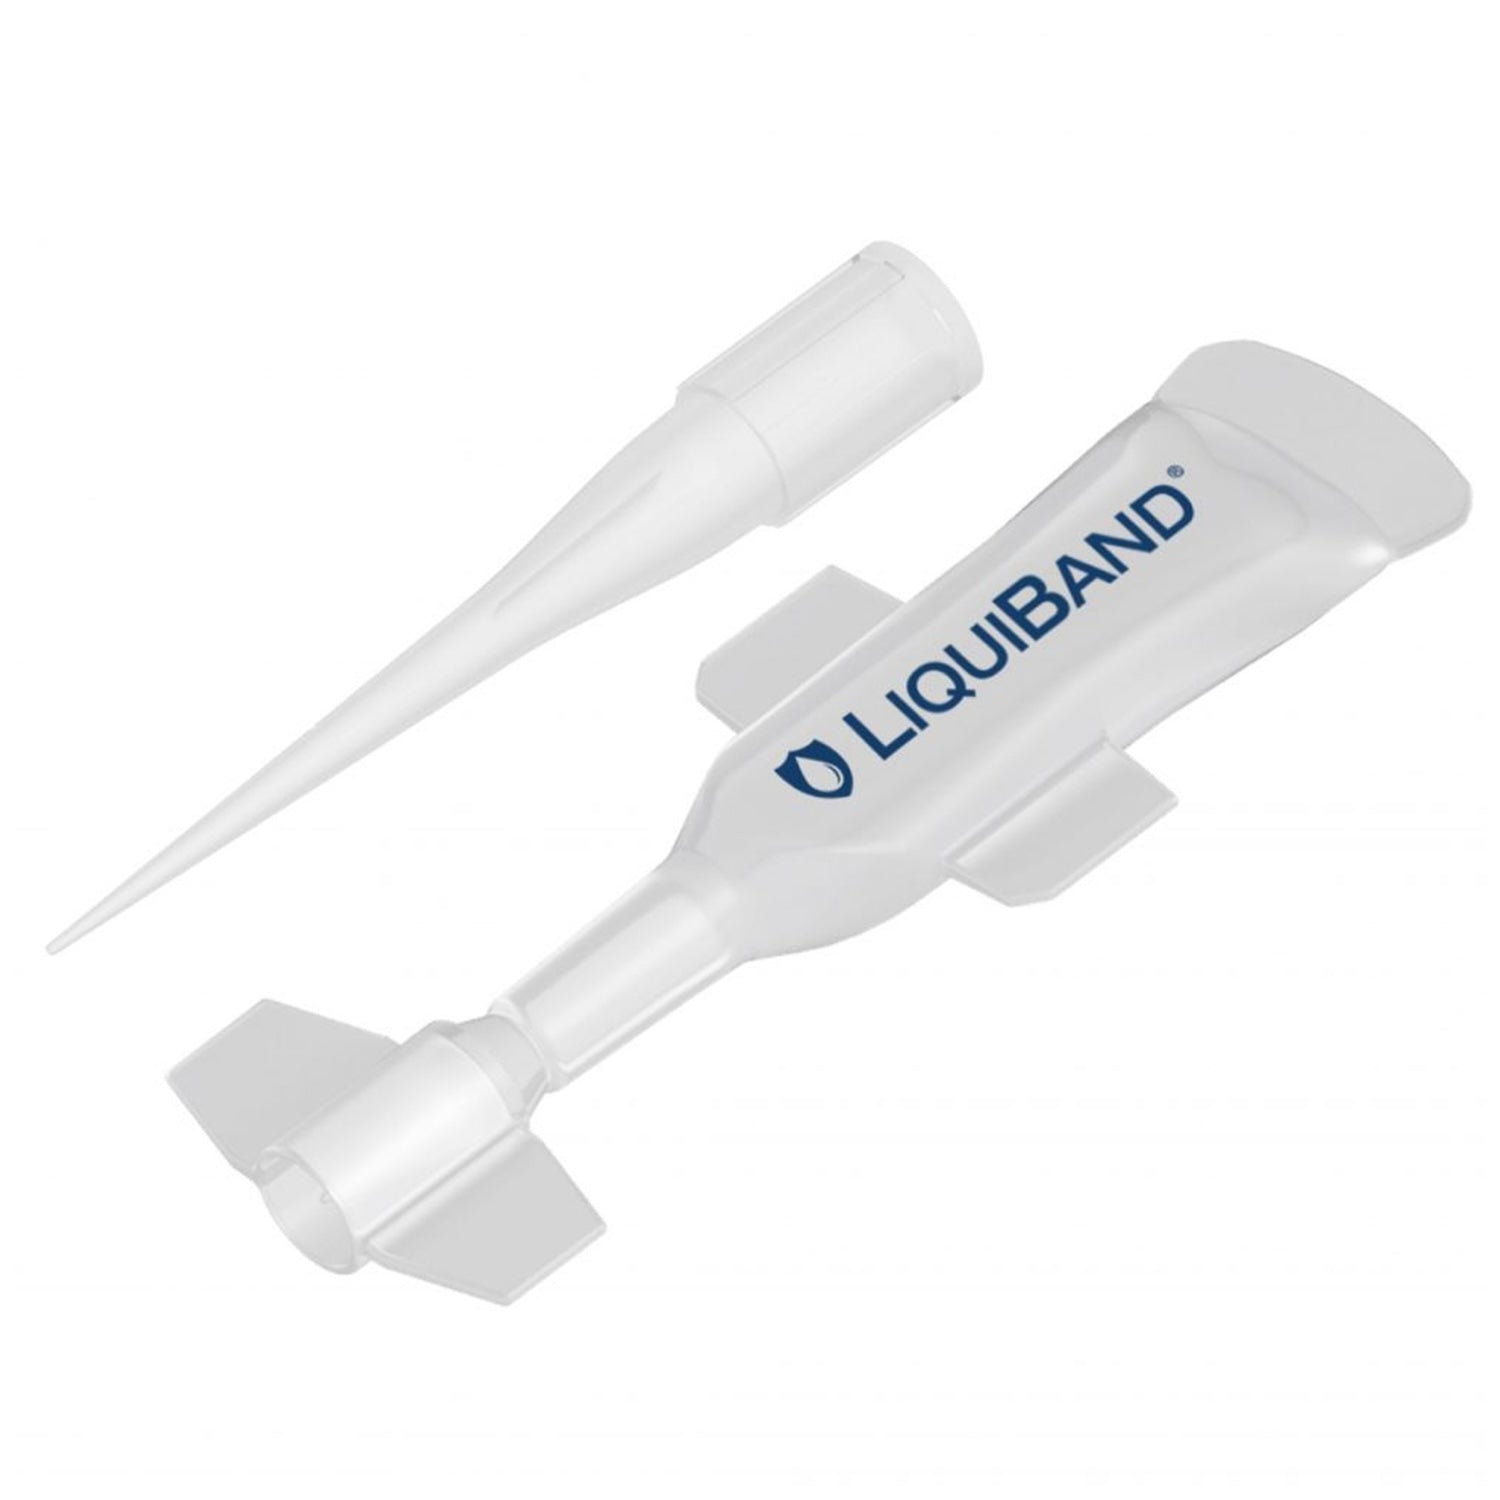 LiquiBand Tissue Adhesive | Standard | Pack of 10 (1)